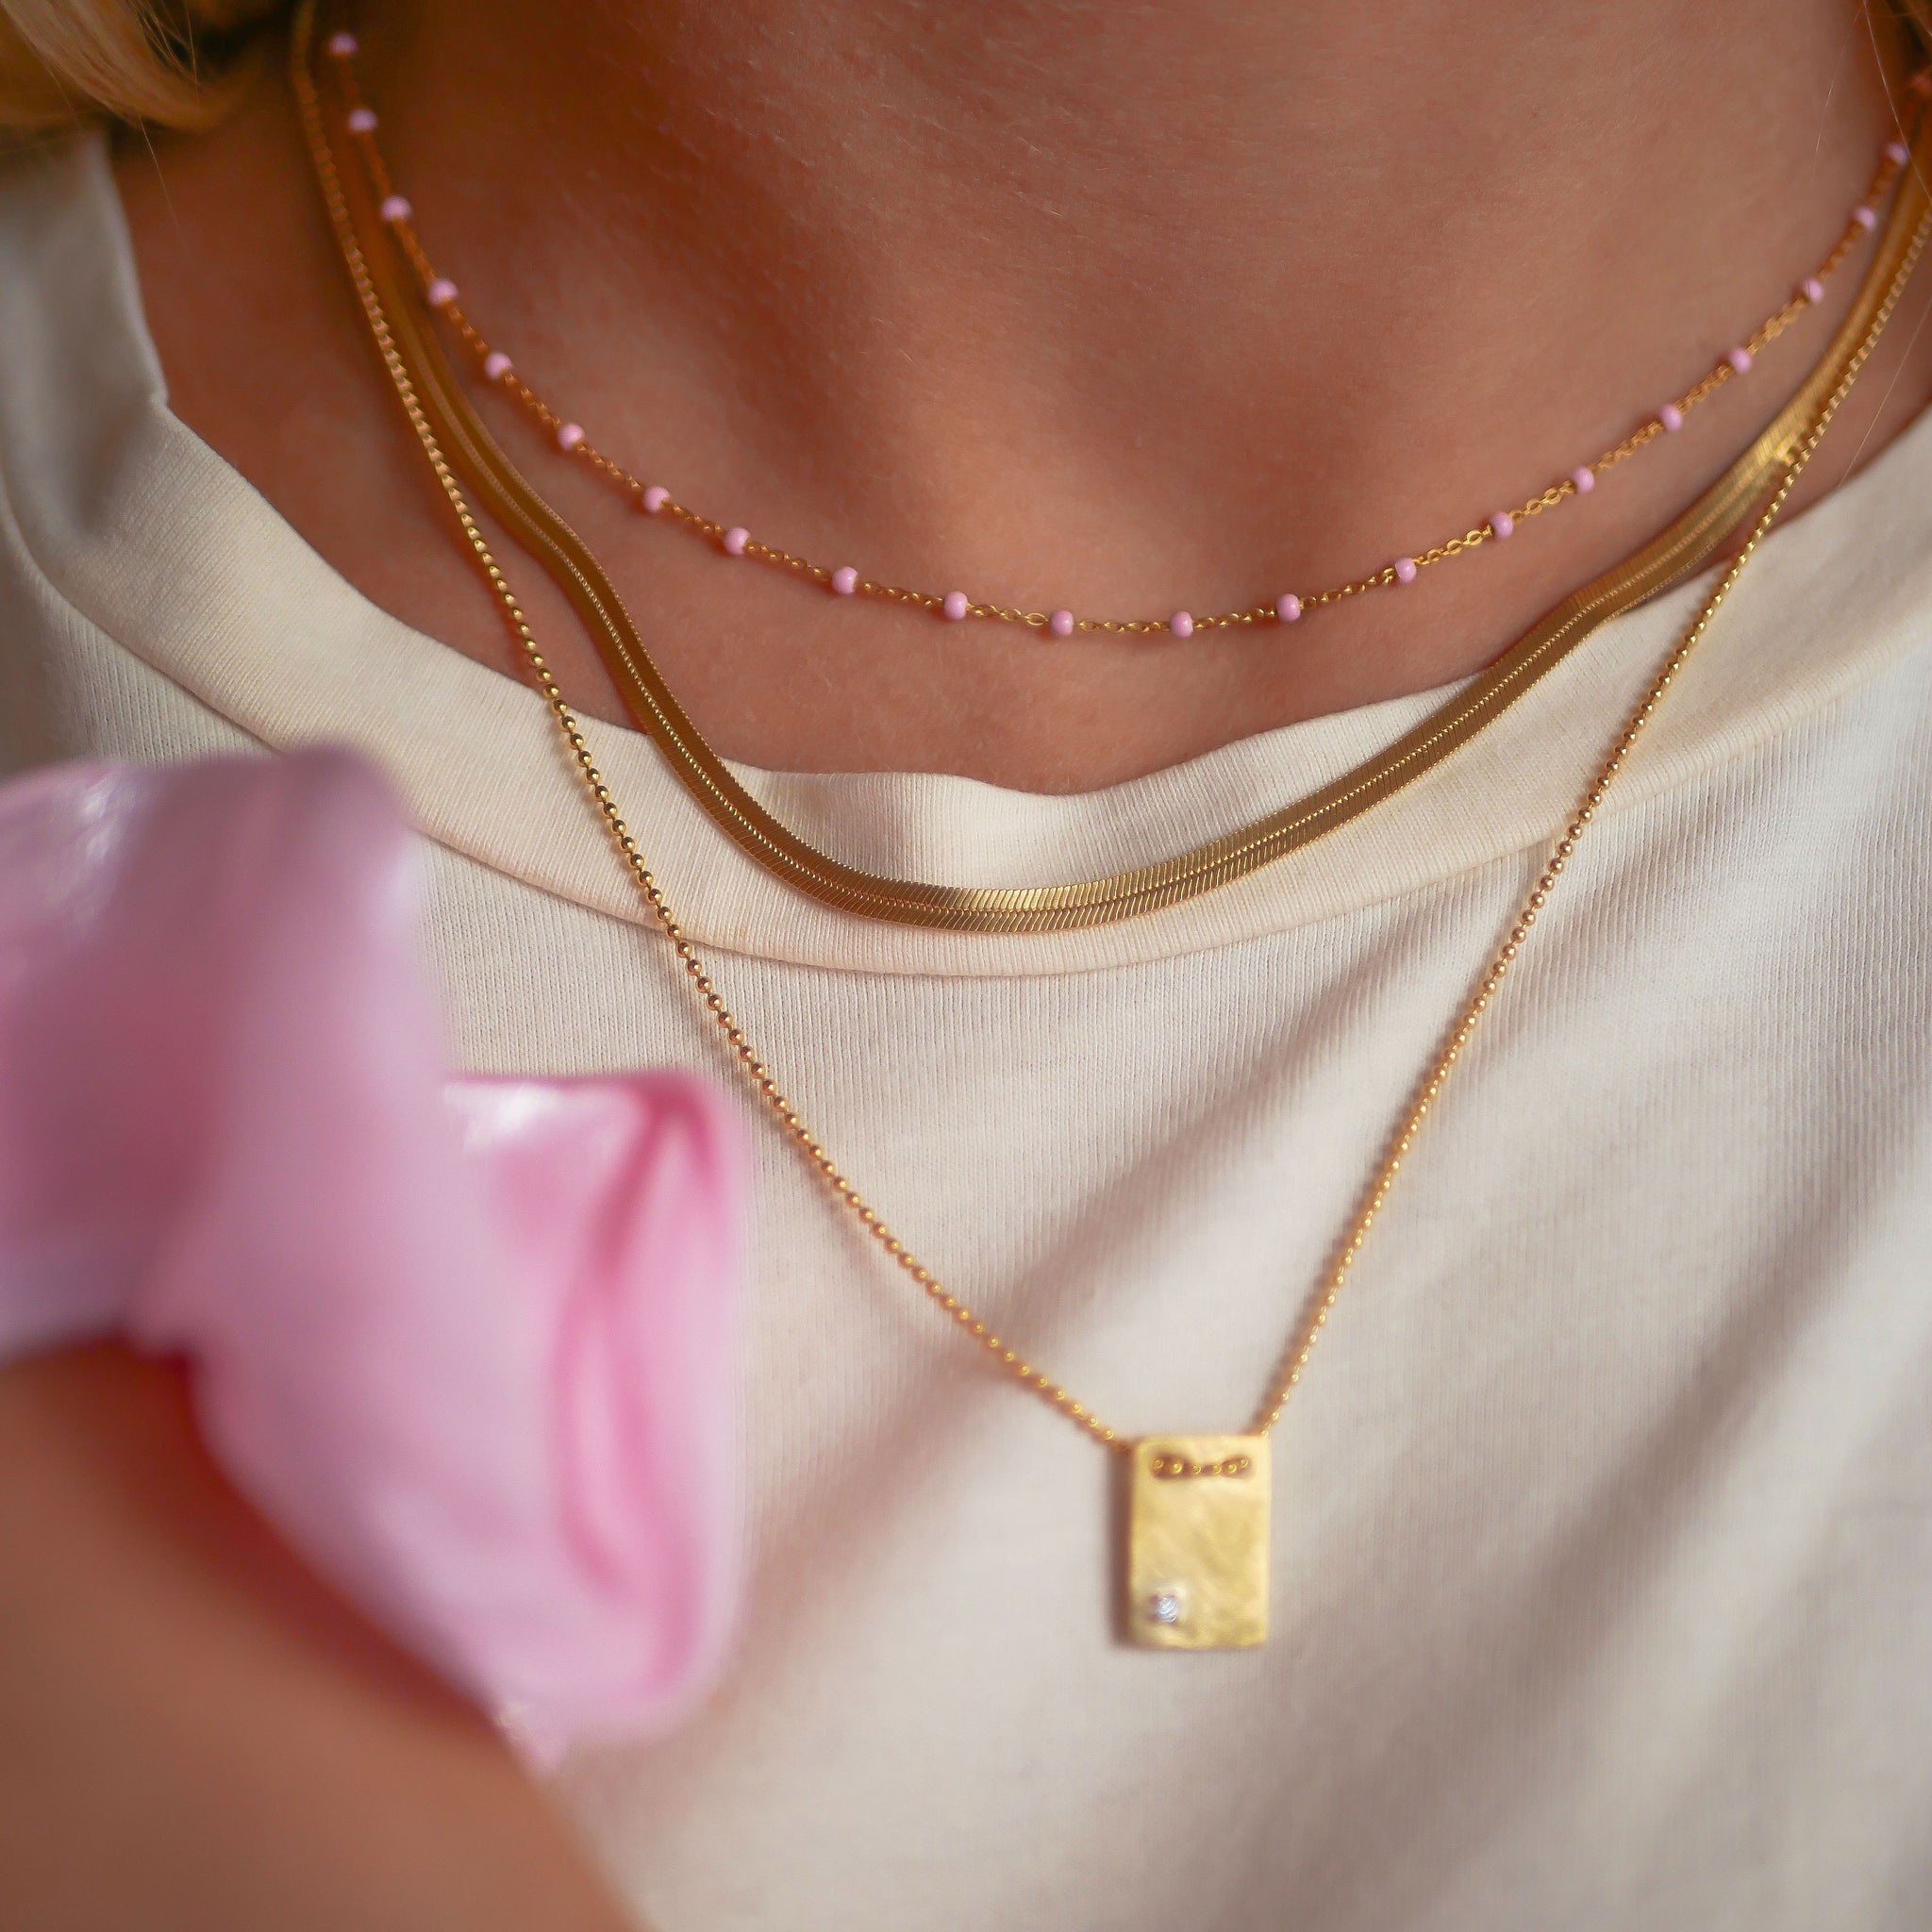 Caroline 18k Gold-plated Necklace